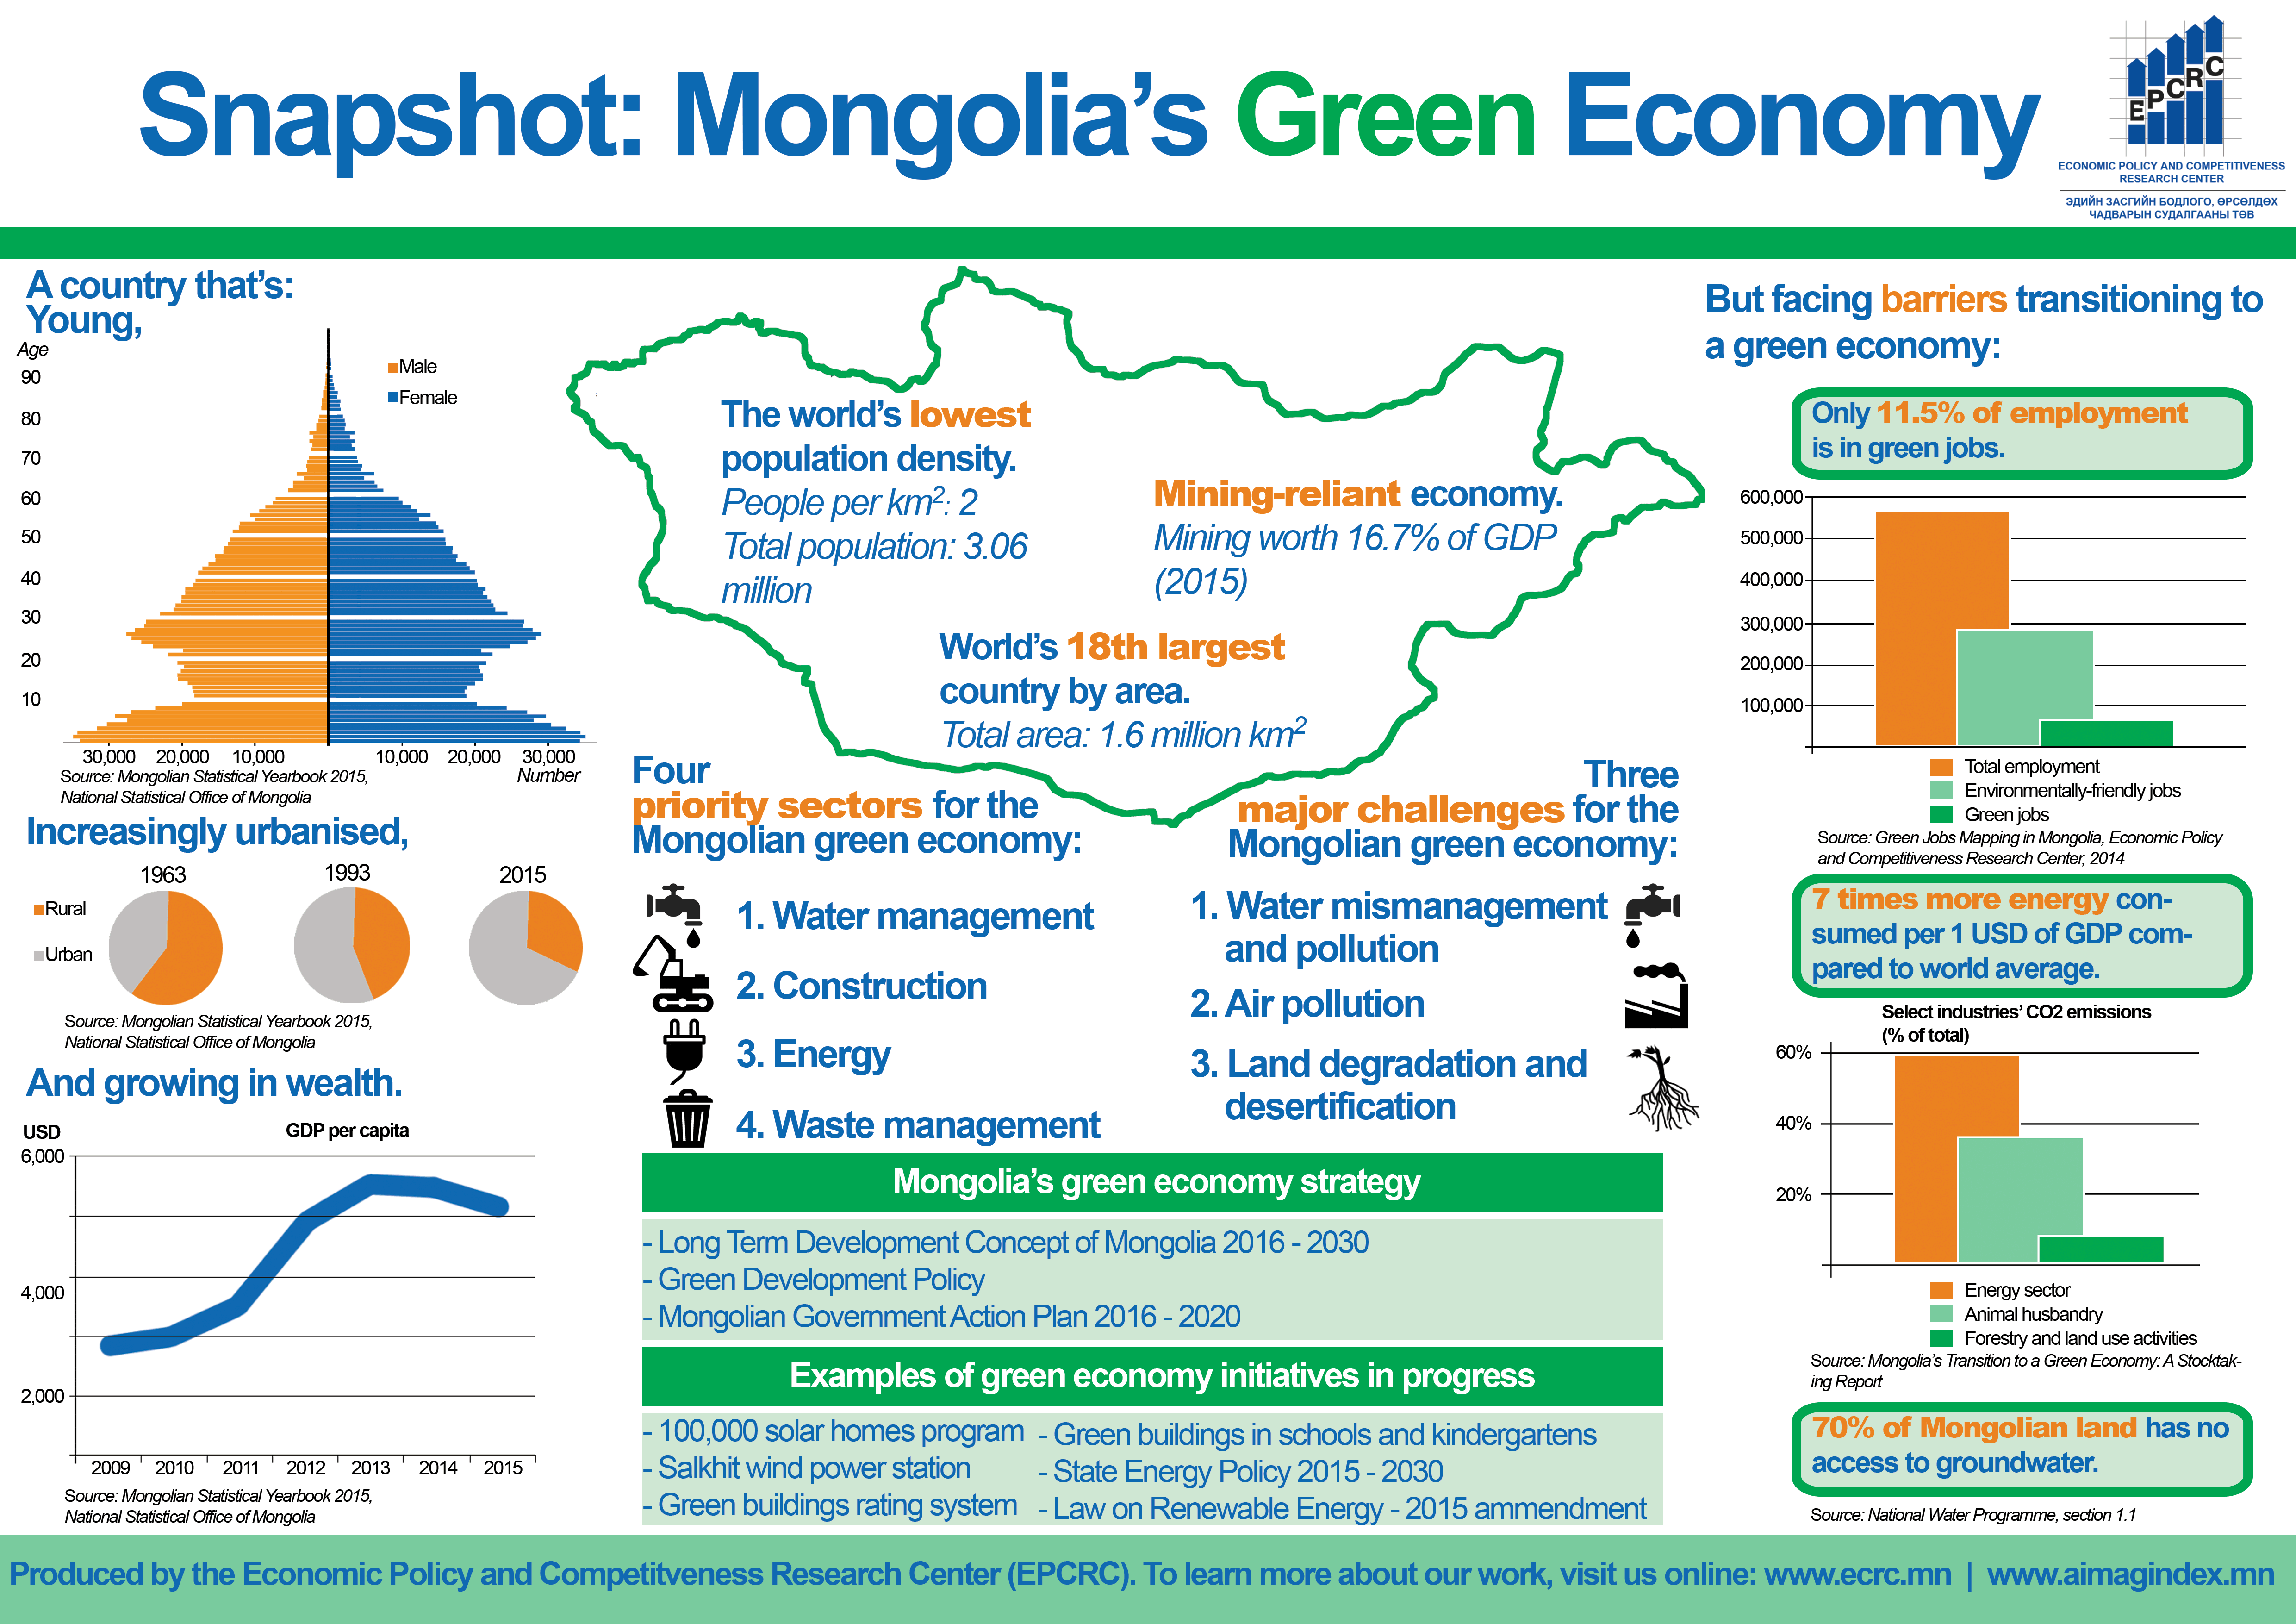 Snapshot of Mongolia's Green Economy